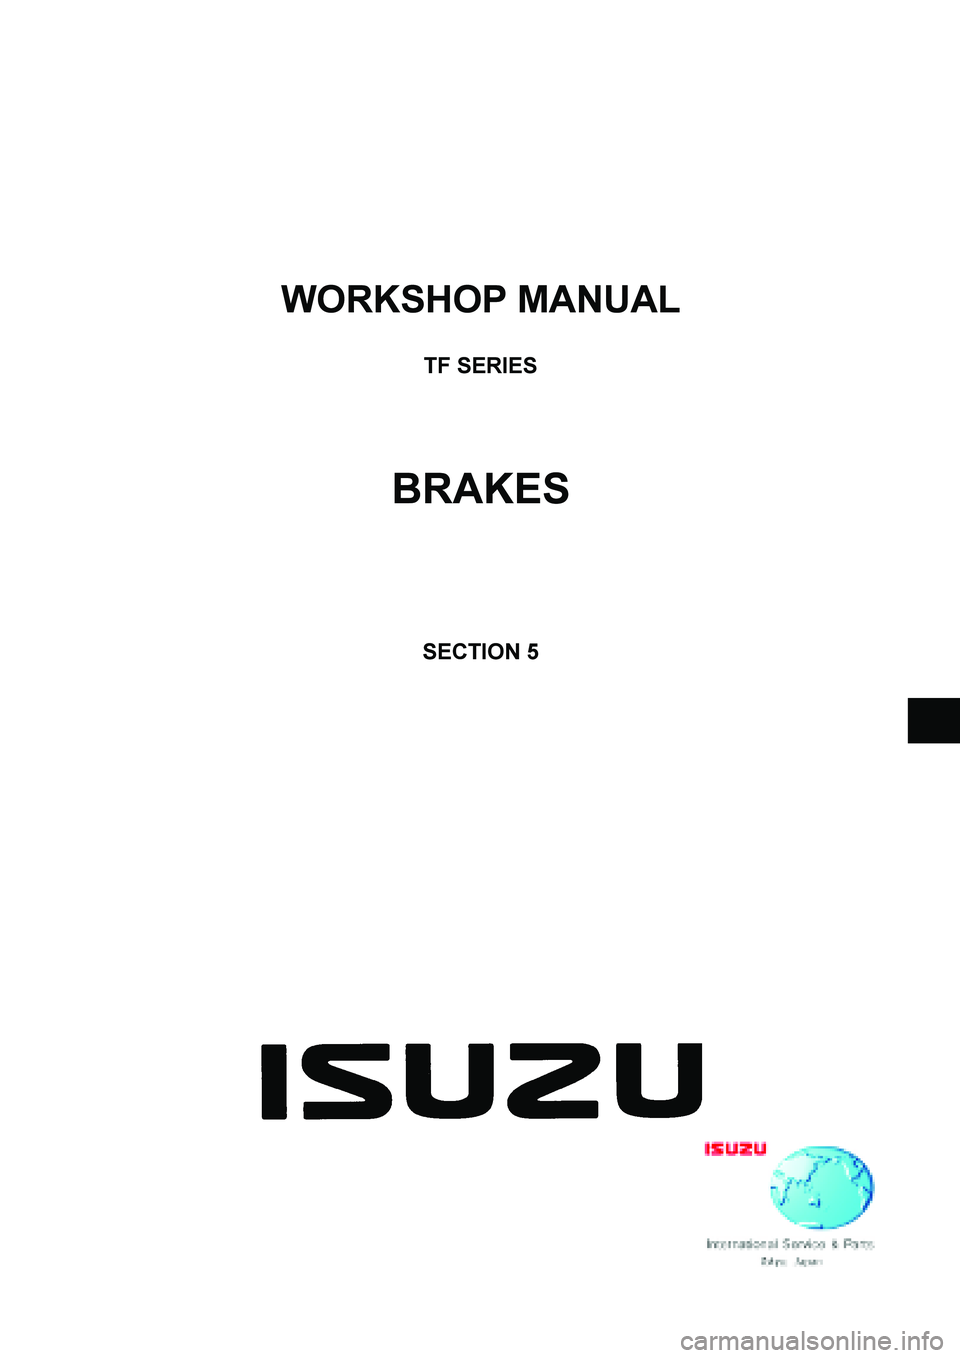 ISUZU TF SERIES 2004  Workshop Manual  
WORKSHOP MANUAL 
 
TF SERIES 
 
 
 
 
BRAKES 
 
 
 
 
 
 
SECTION 5 
 
 
  